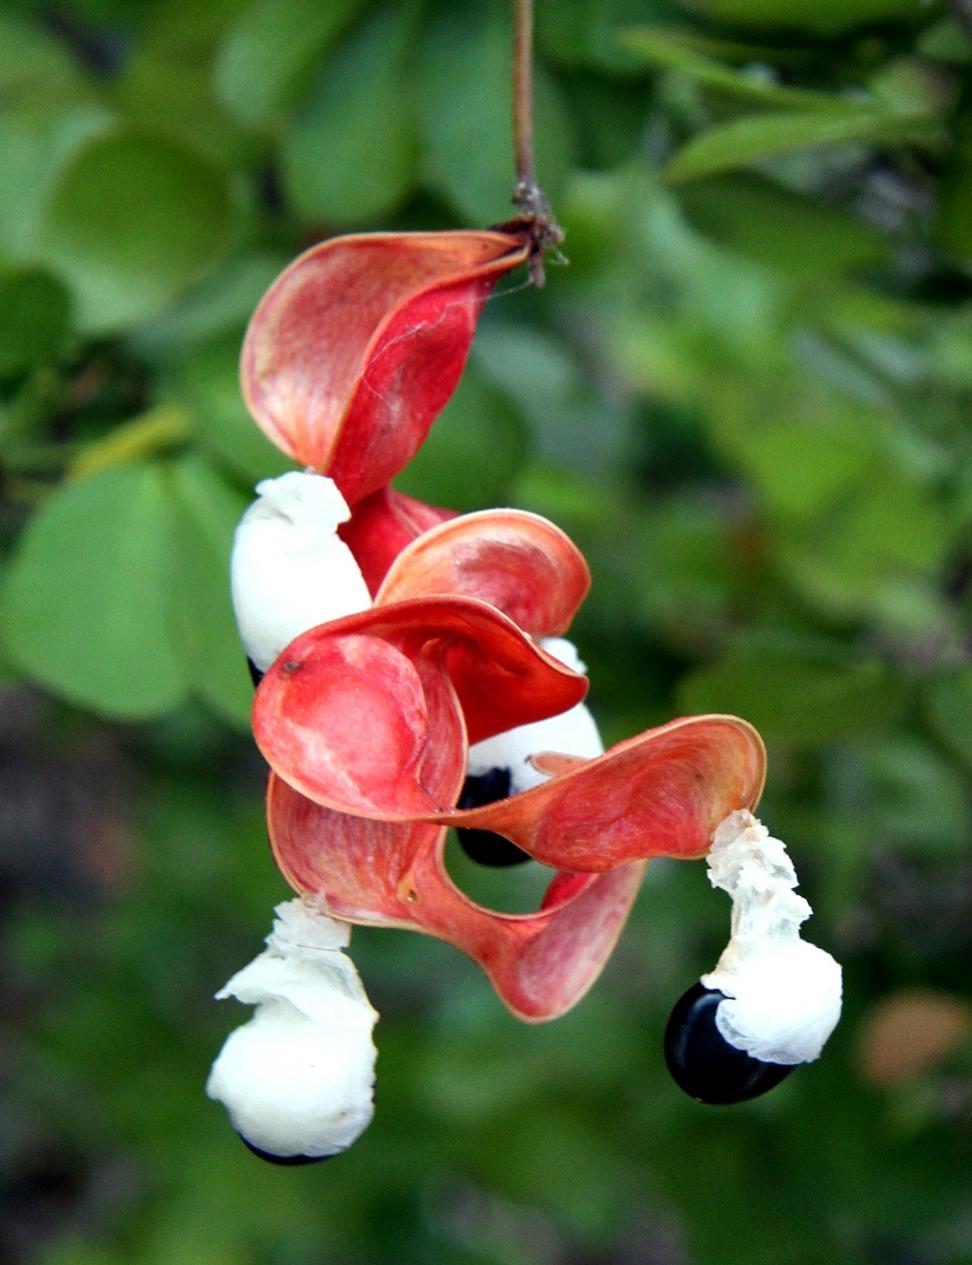 Madras thorn (Pithecellobium) is a legume that also